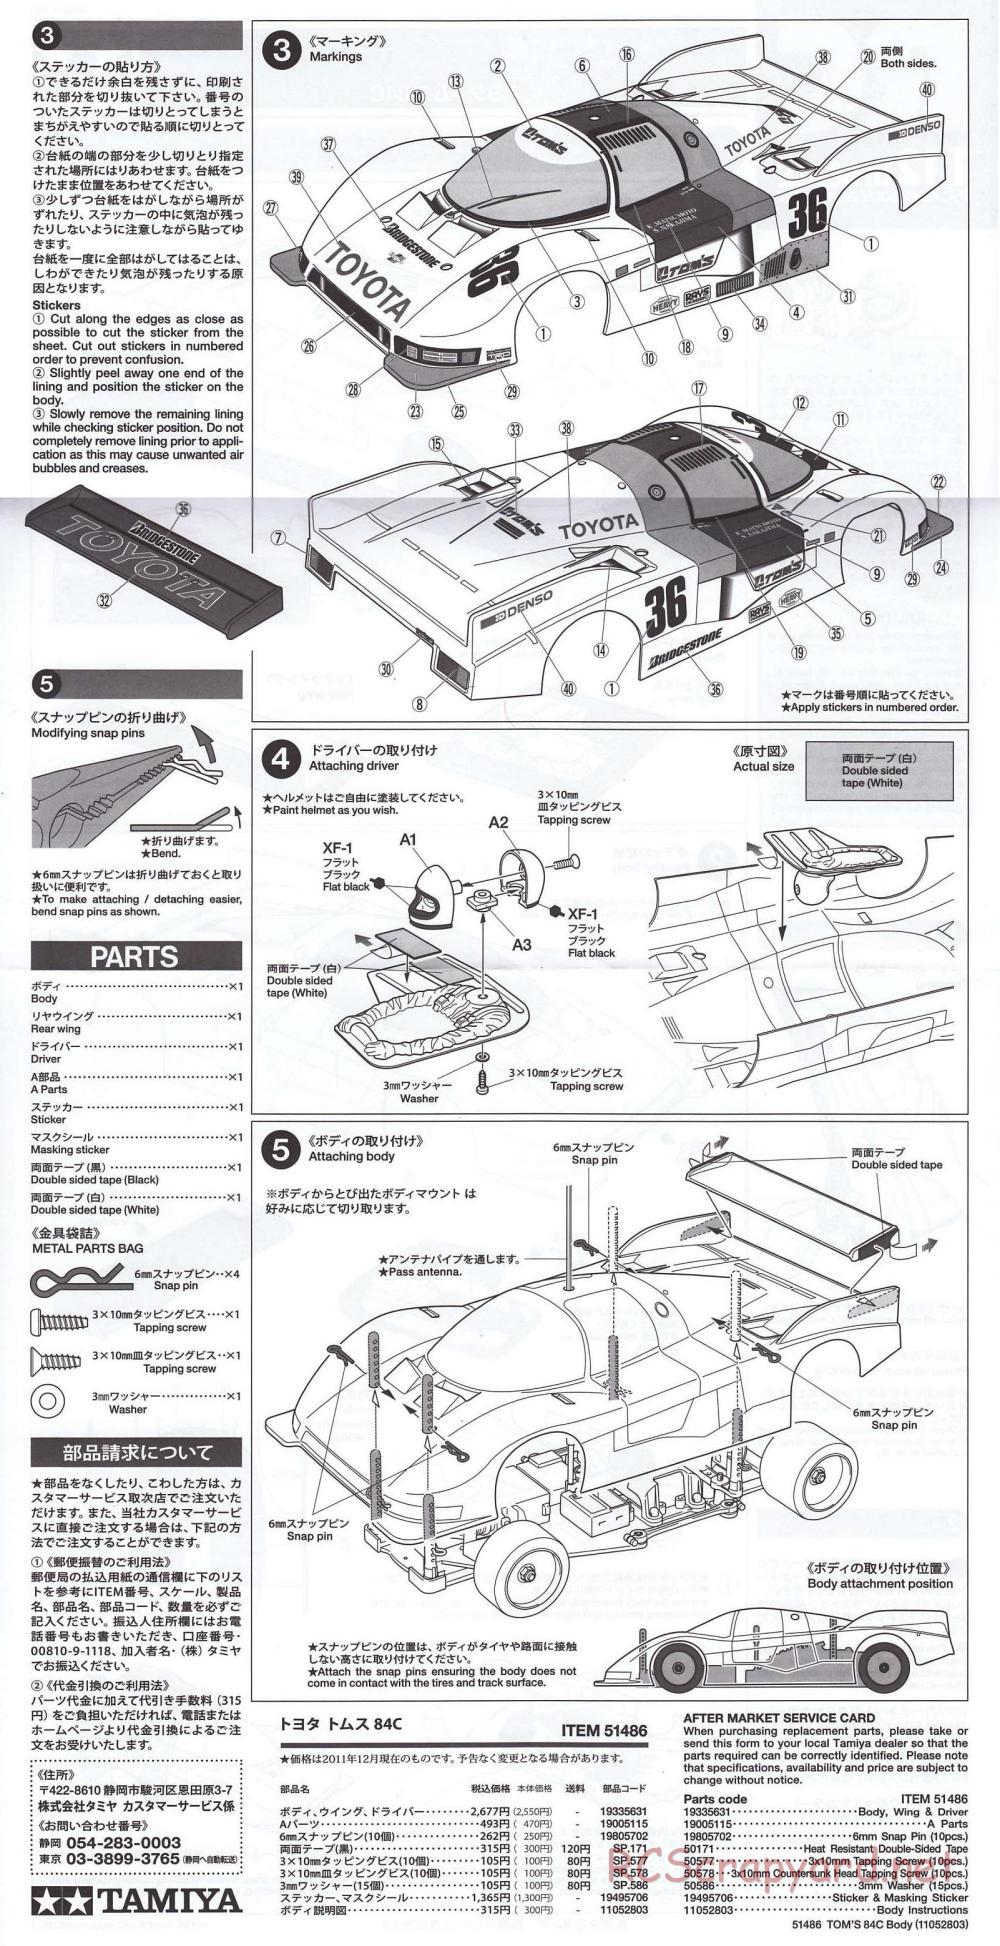 Tamiya - Toyota Tom's 84C - RM-01 Chassis - Body Manual - Page 2